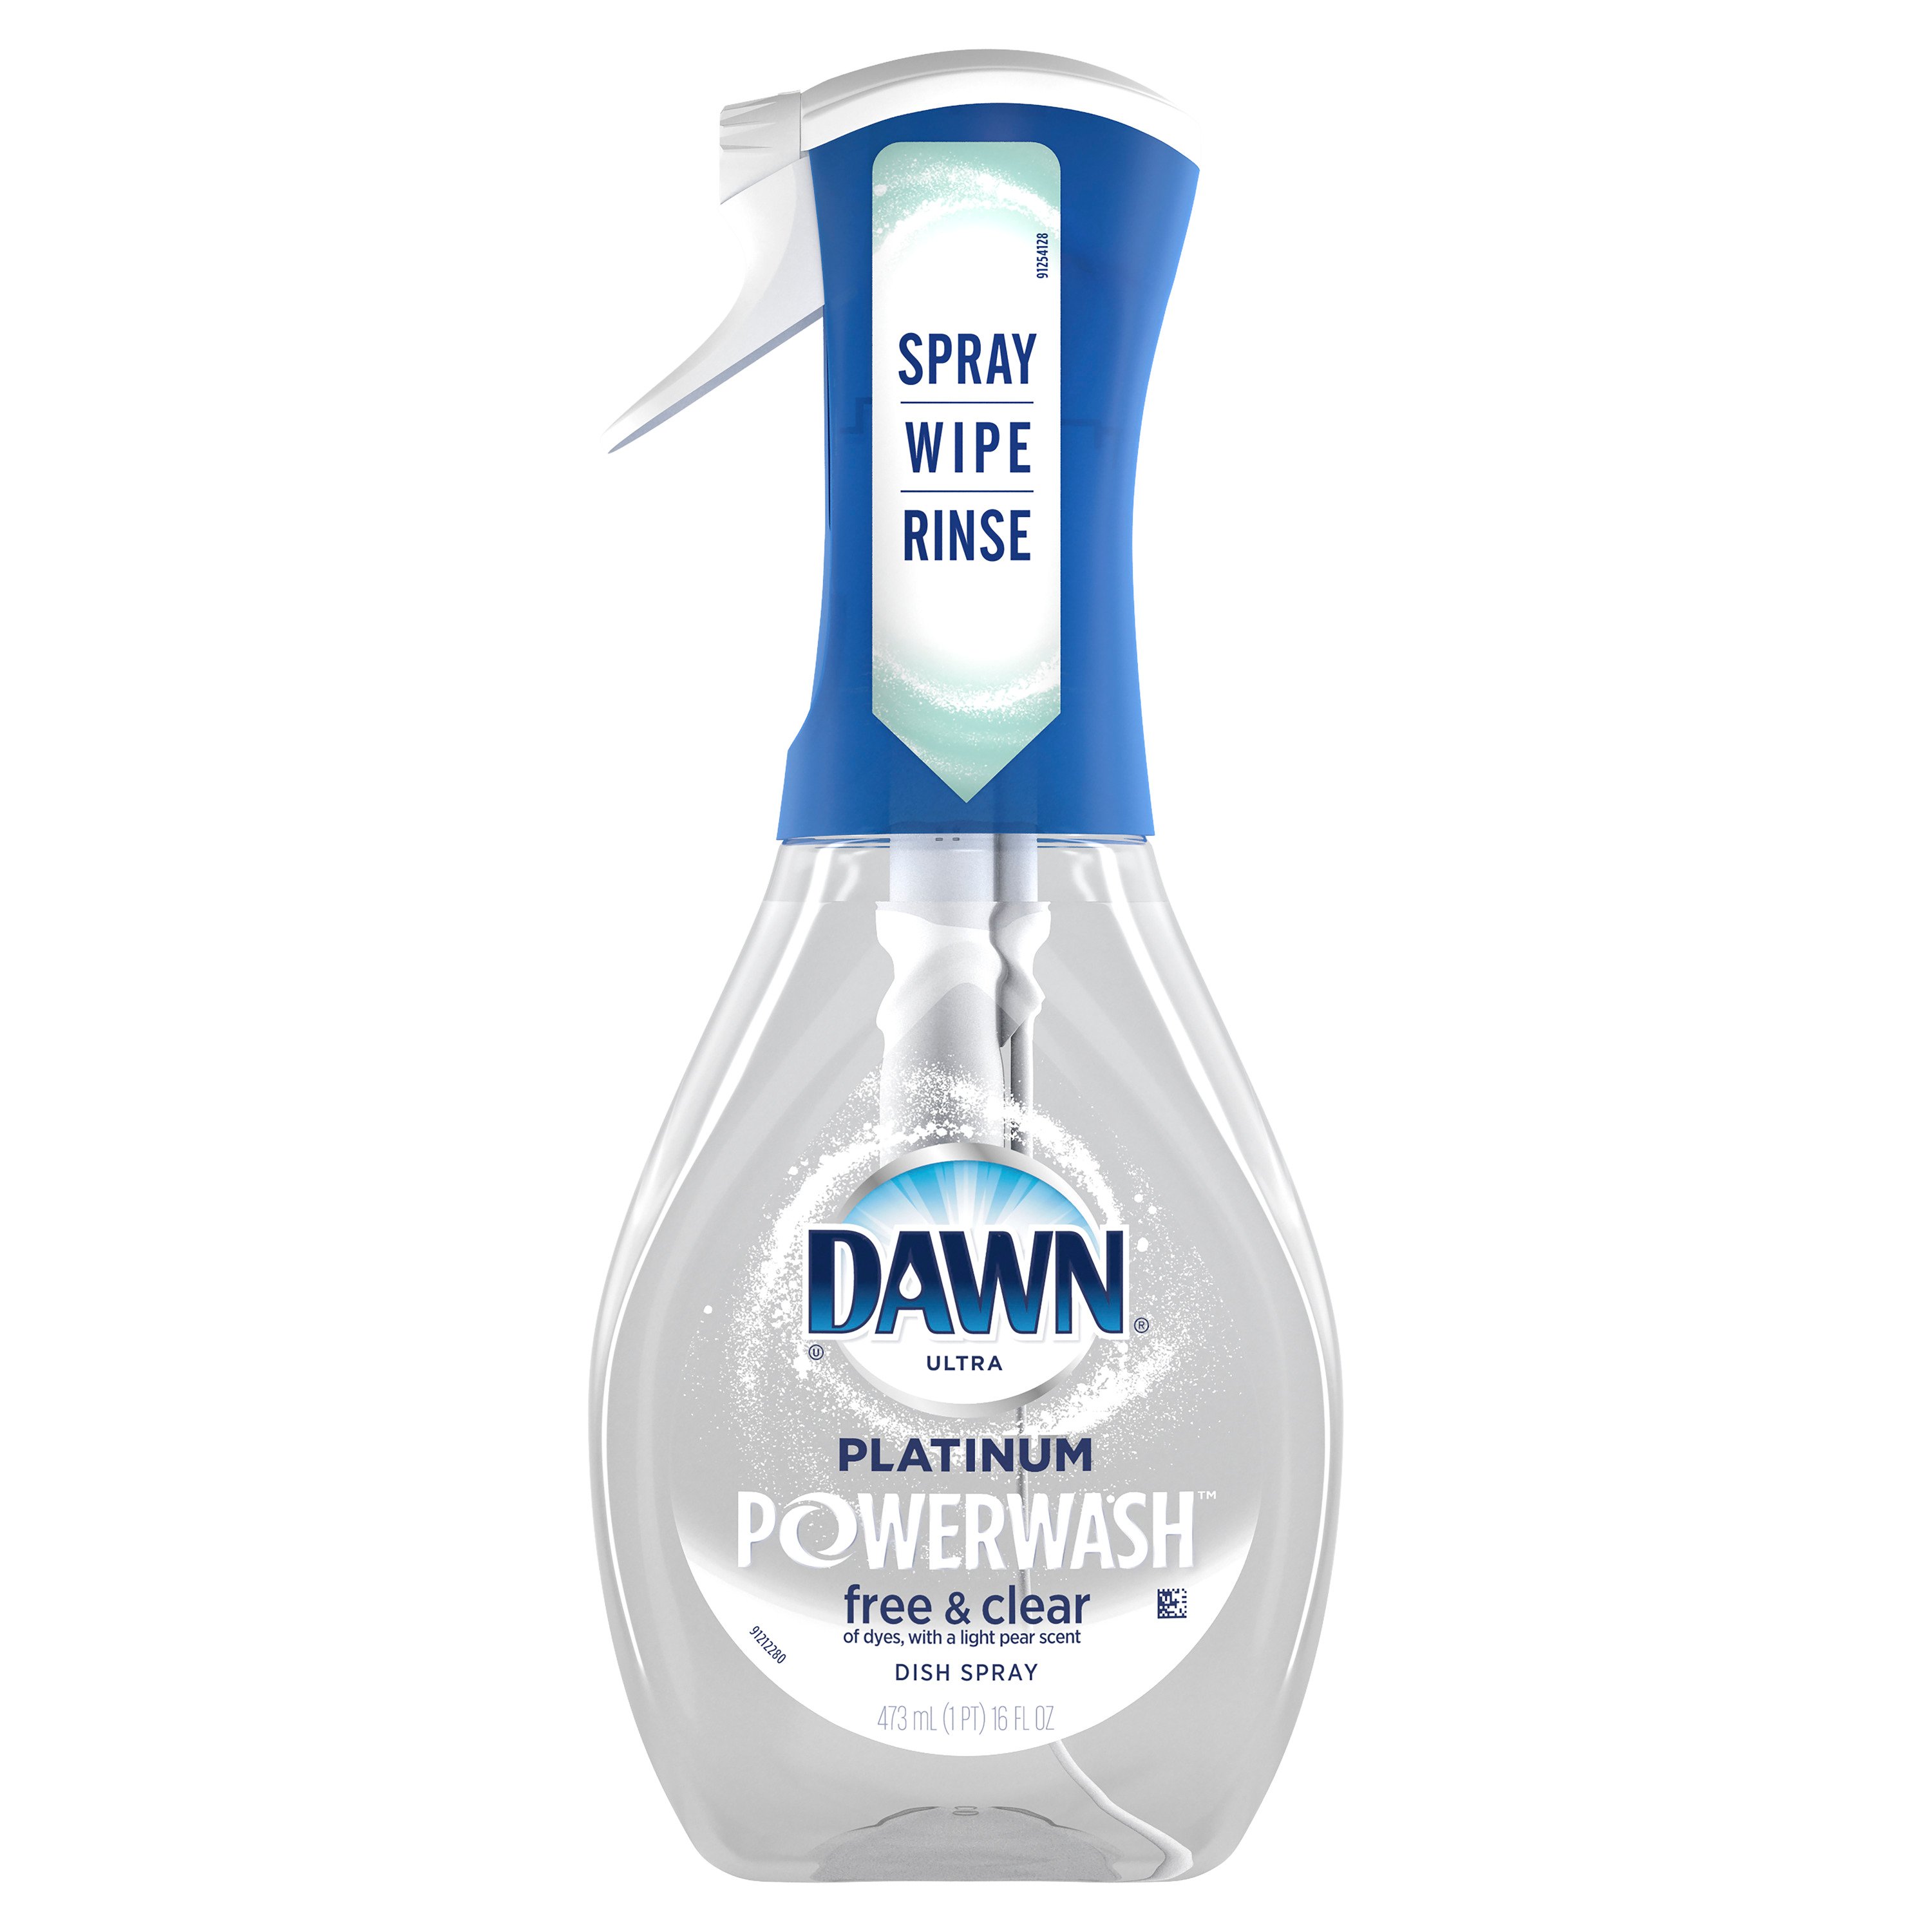 Dawn Platinum Powerwash Free & Clear Dish Spray - Shop Dish Soap & Detergent  at H-E-B